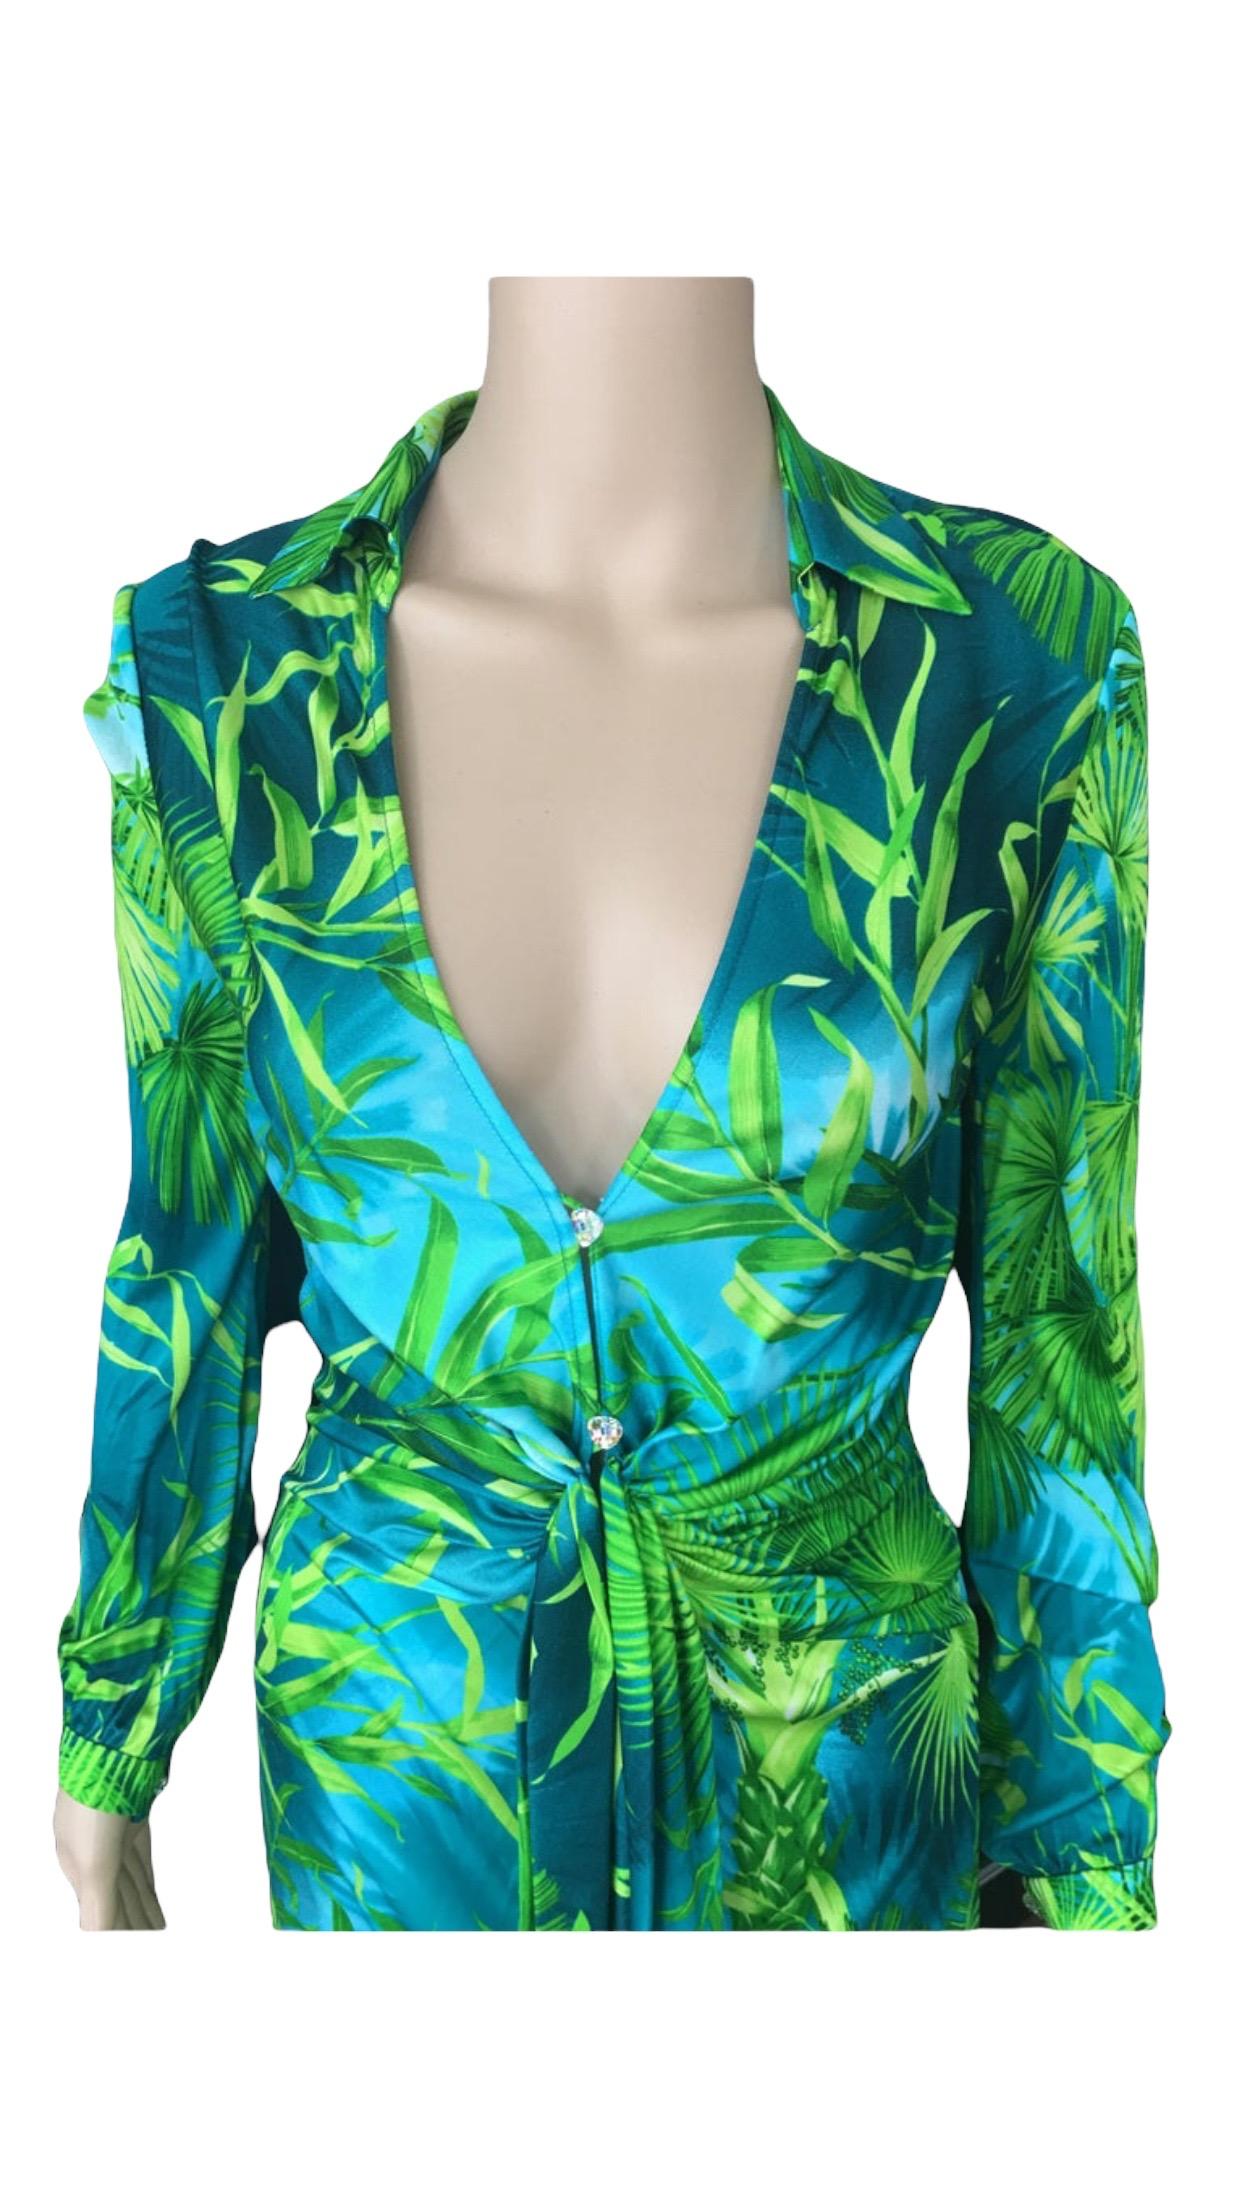 Gianni Versace Runway S/S 2000 Vintage Tropical Print Plunging Neckline Dress 2